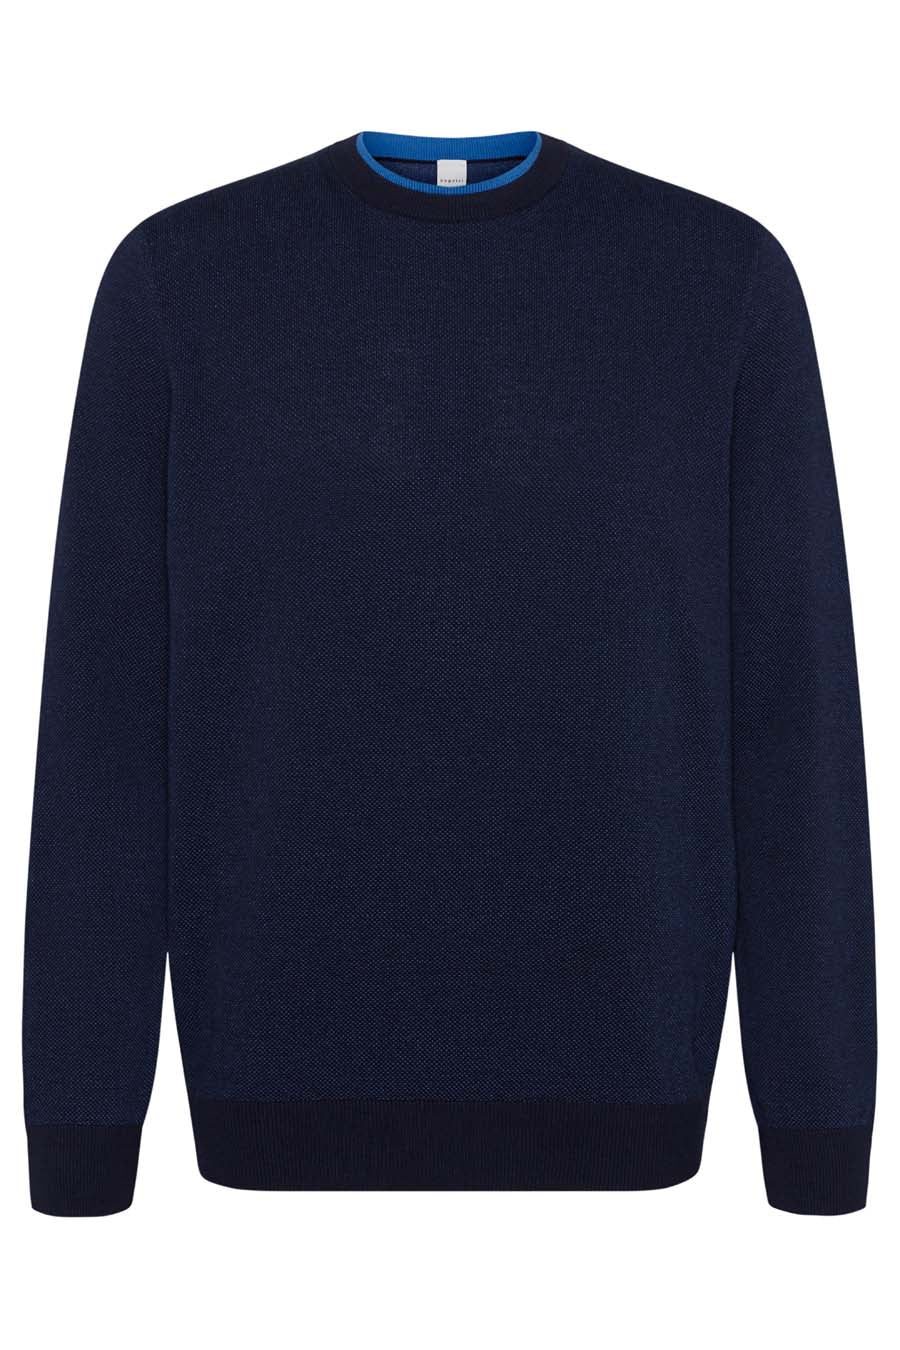 BUGATTI Mens Long Sleeve Sweater NAVY BLUE